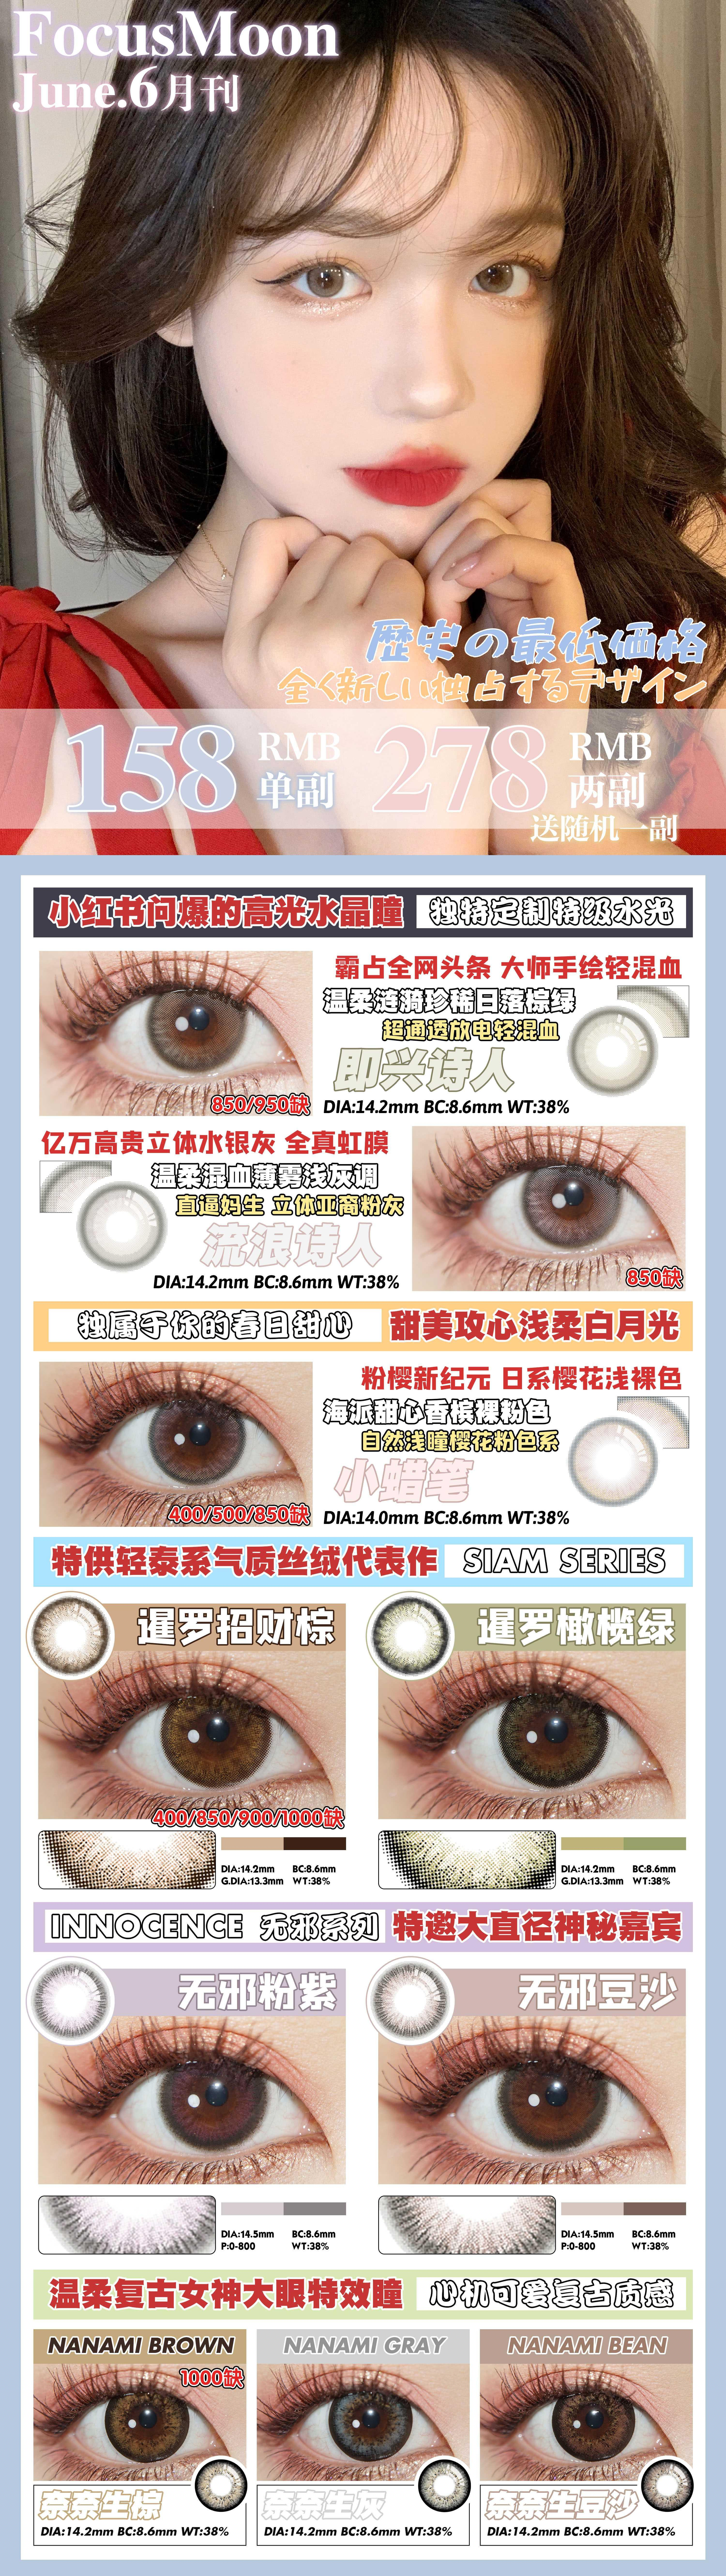 FocusMoon美瞳 6月刊来袭 颜值和舒适度都是超扛打 - VVCON美瞳网